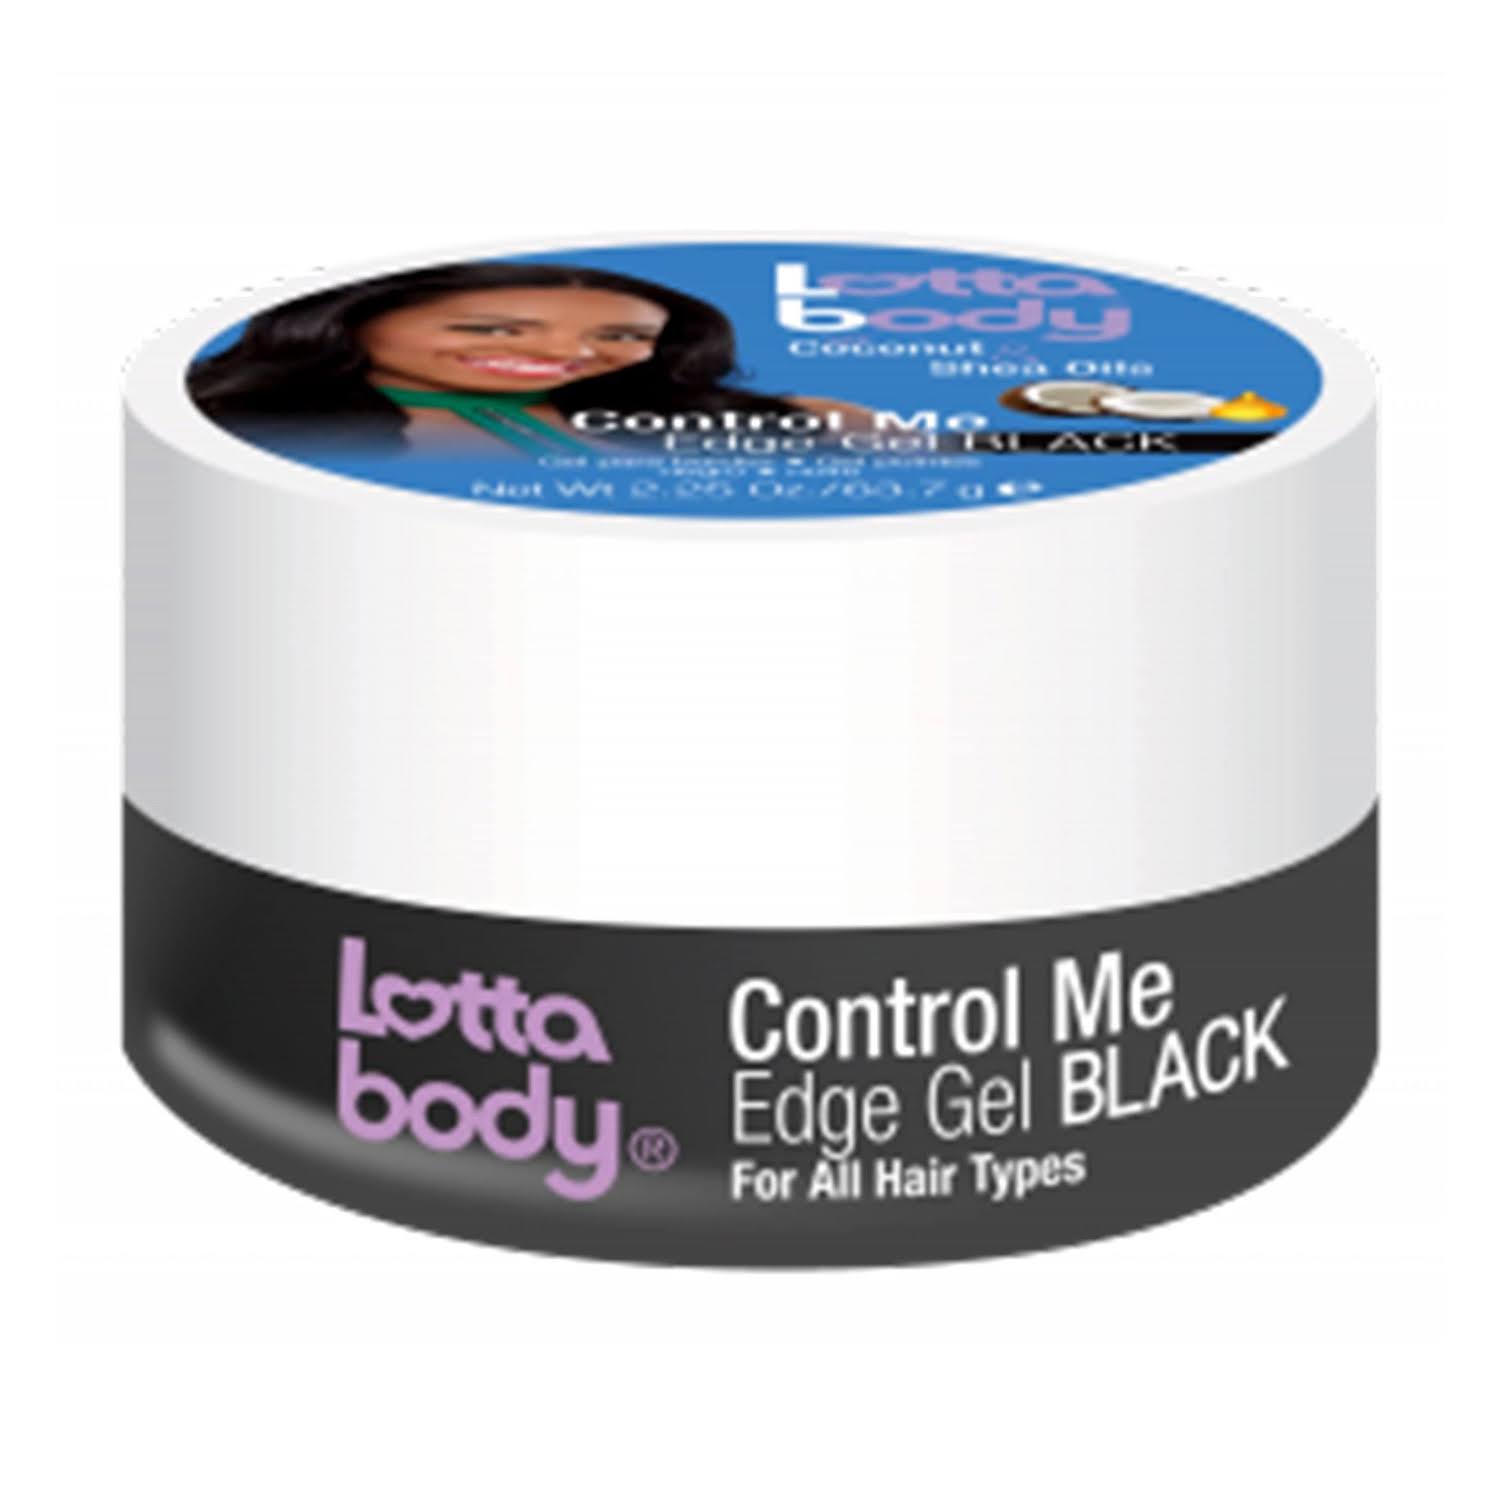 Lottabody Control Me Edge Gel Black, 2.25 oz